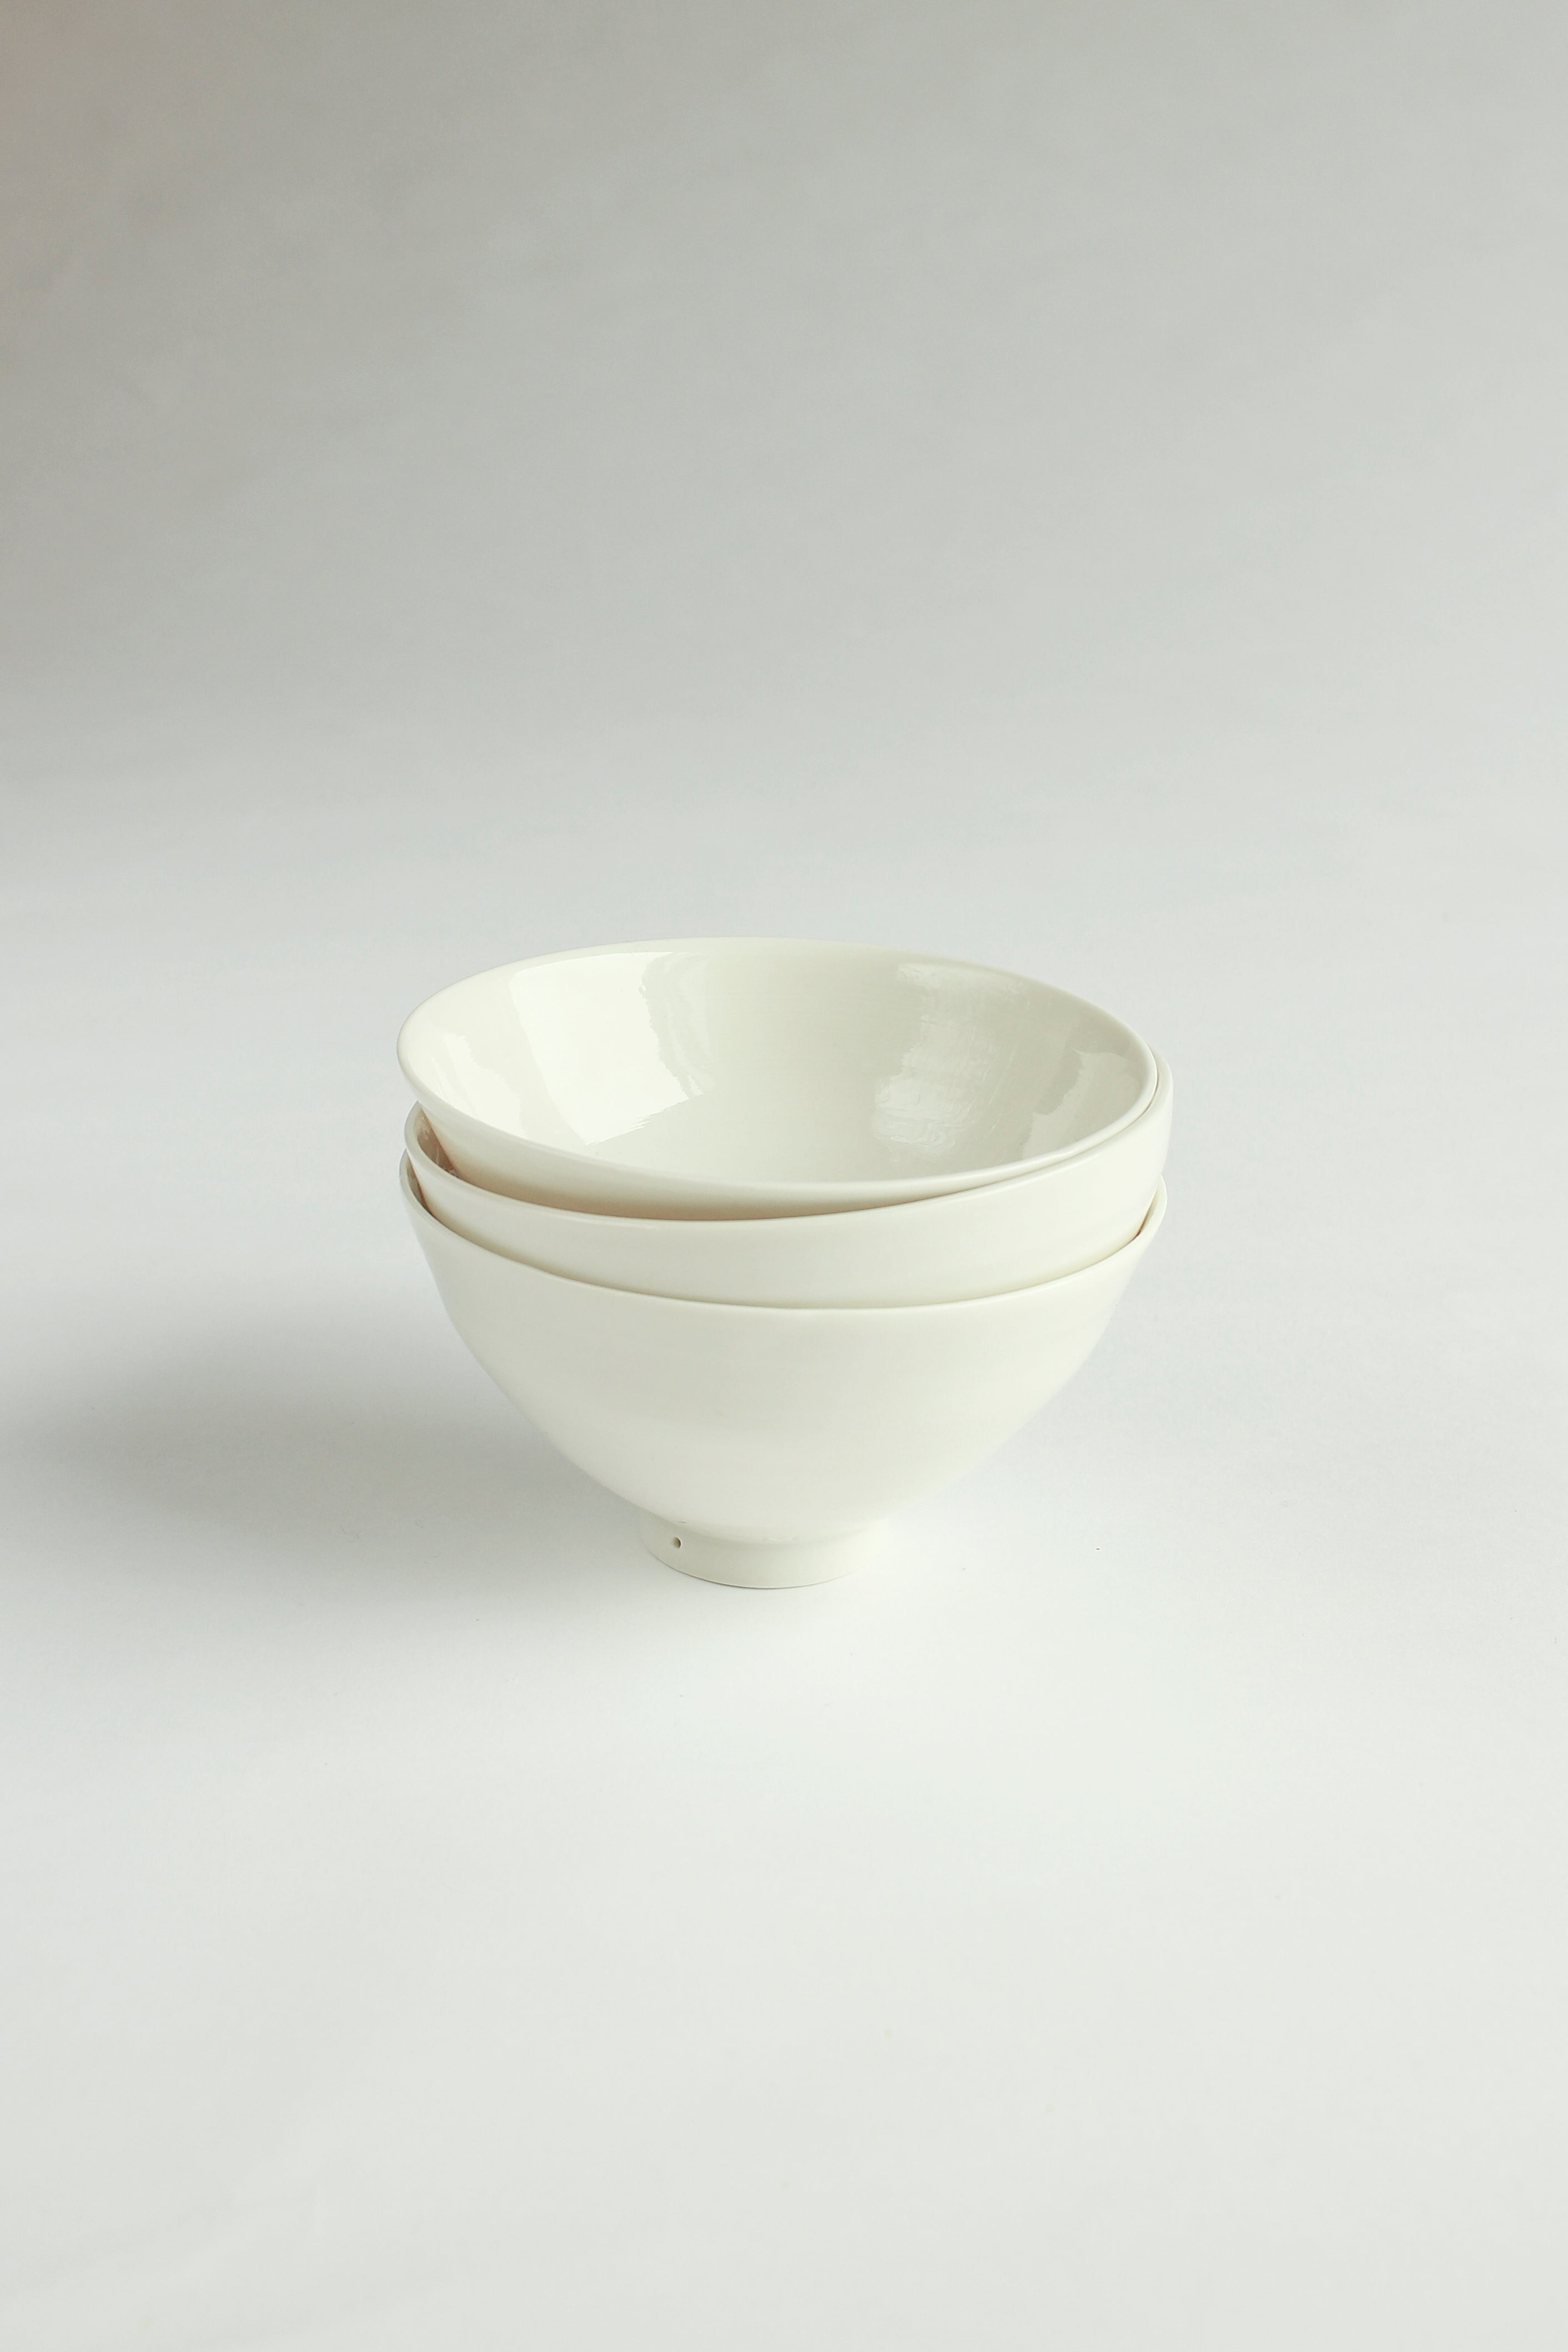 Tribute to Craftsmanship / Three bowls / Set 2